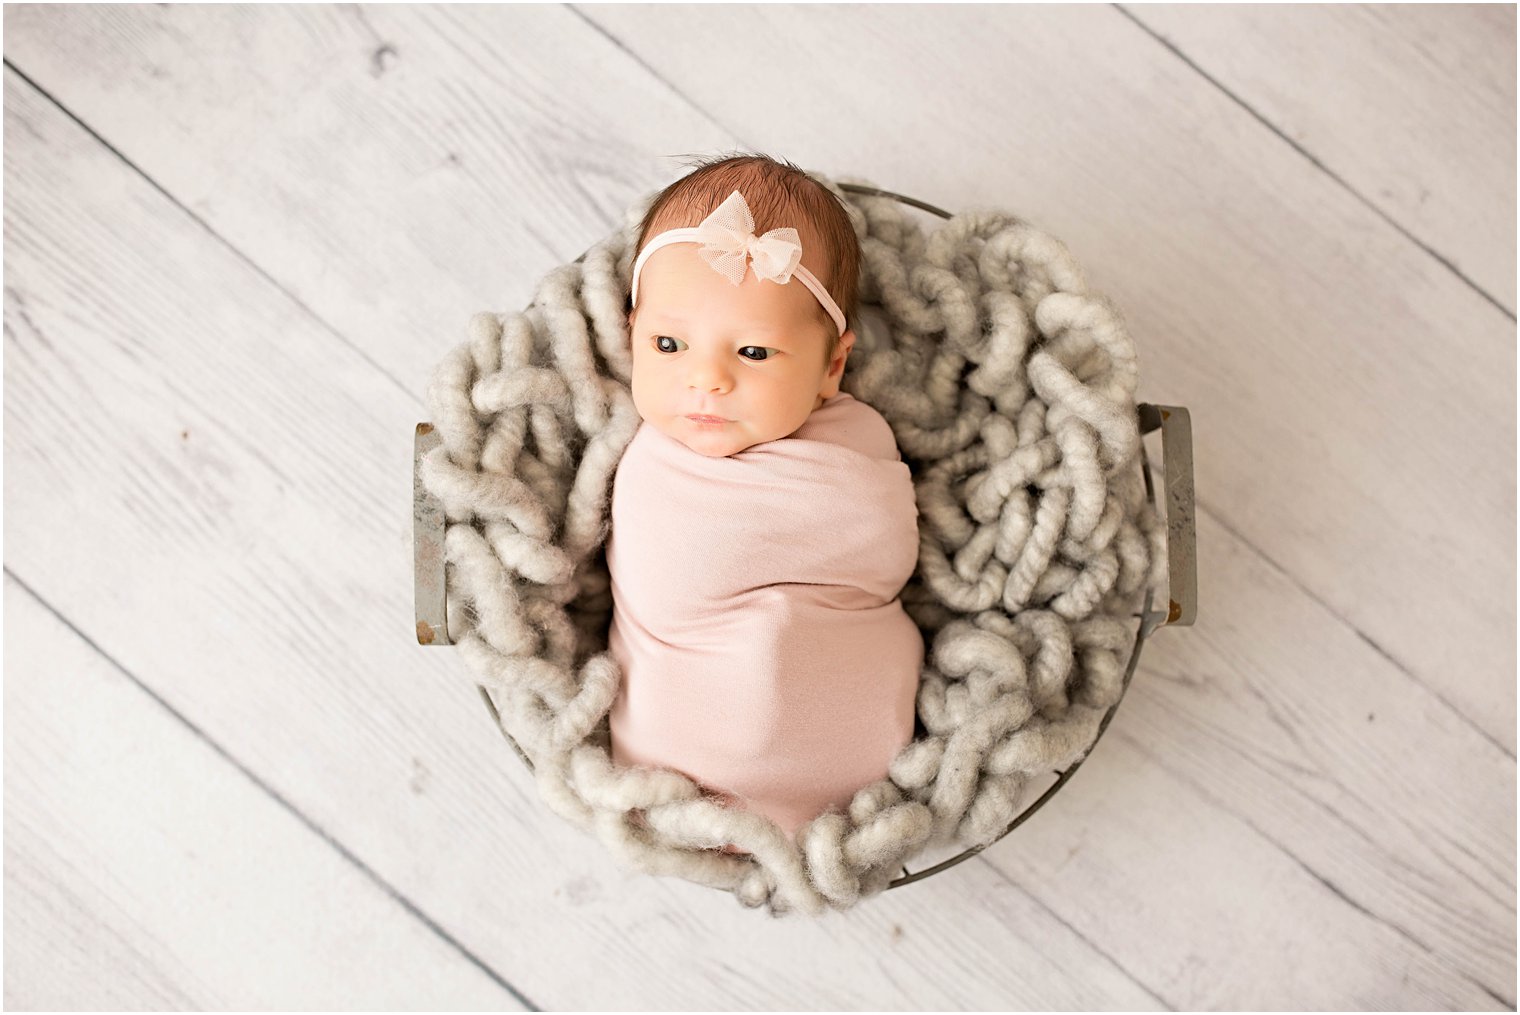 Newborn girl sleeping in a wire basket